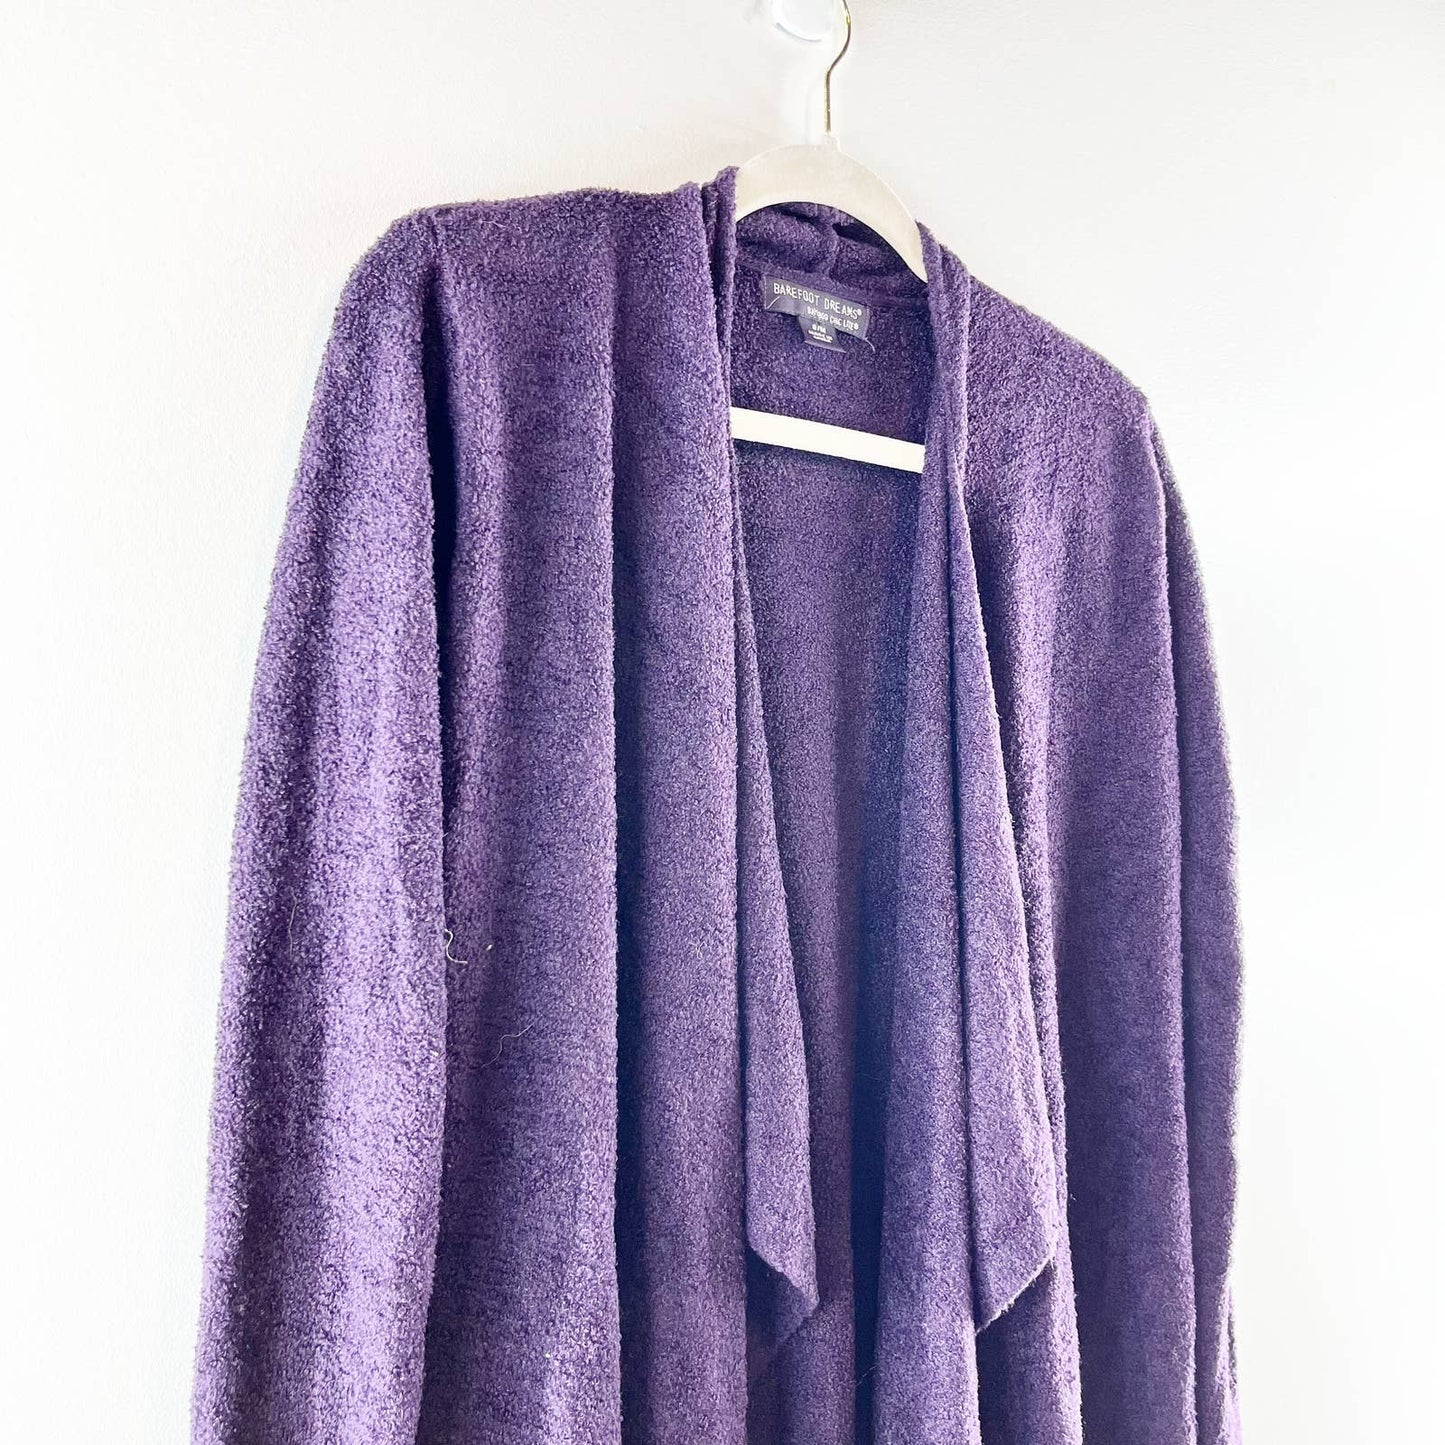 Barefoot Dreams Bamboo Chic Lite Calypso Draped Open Cardigan Sweater Purple S/M